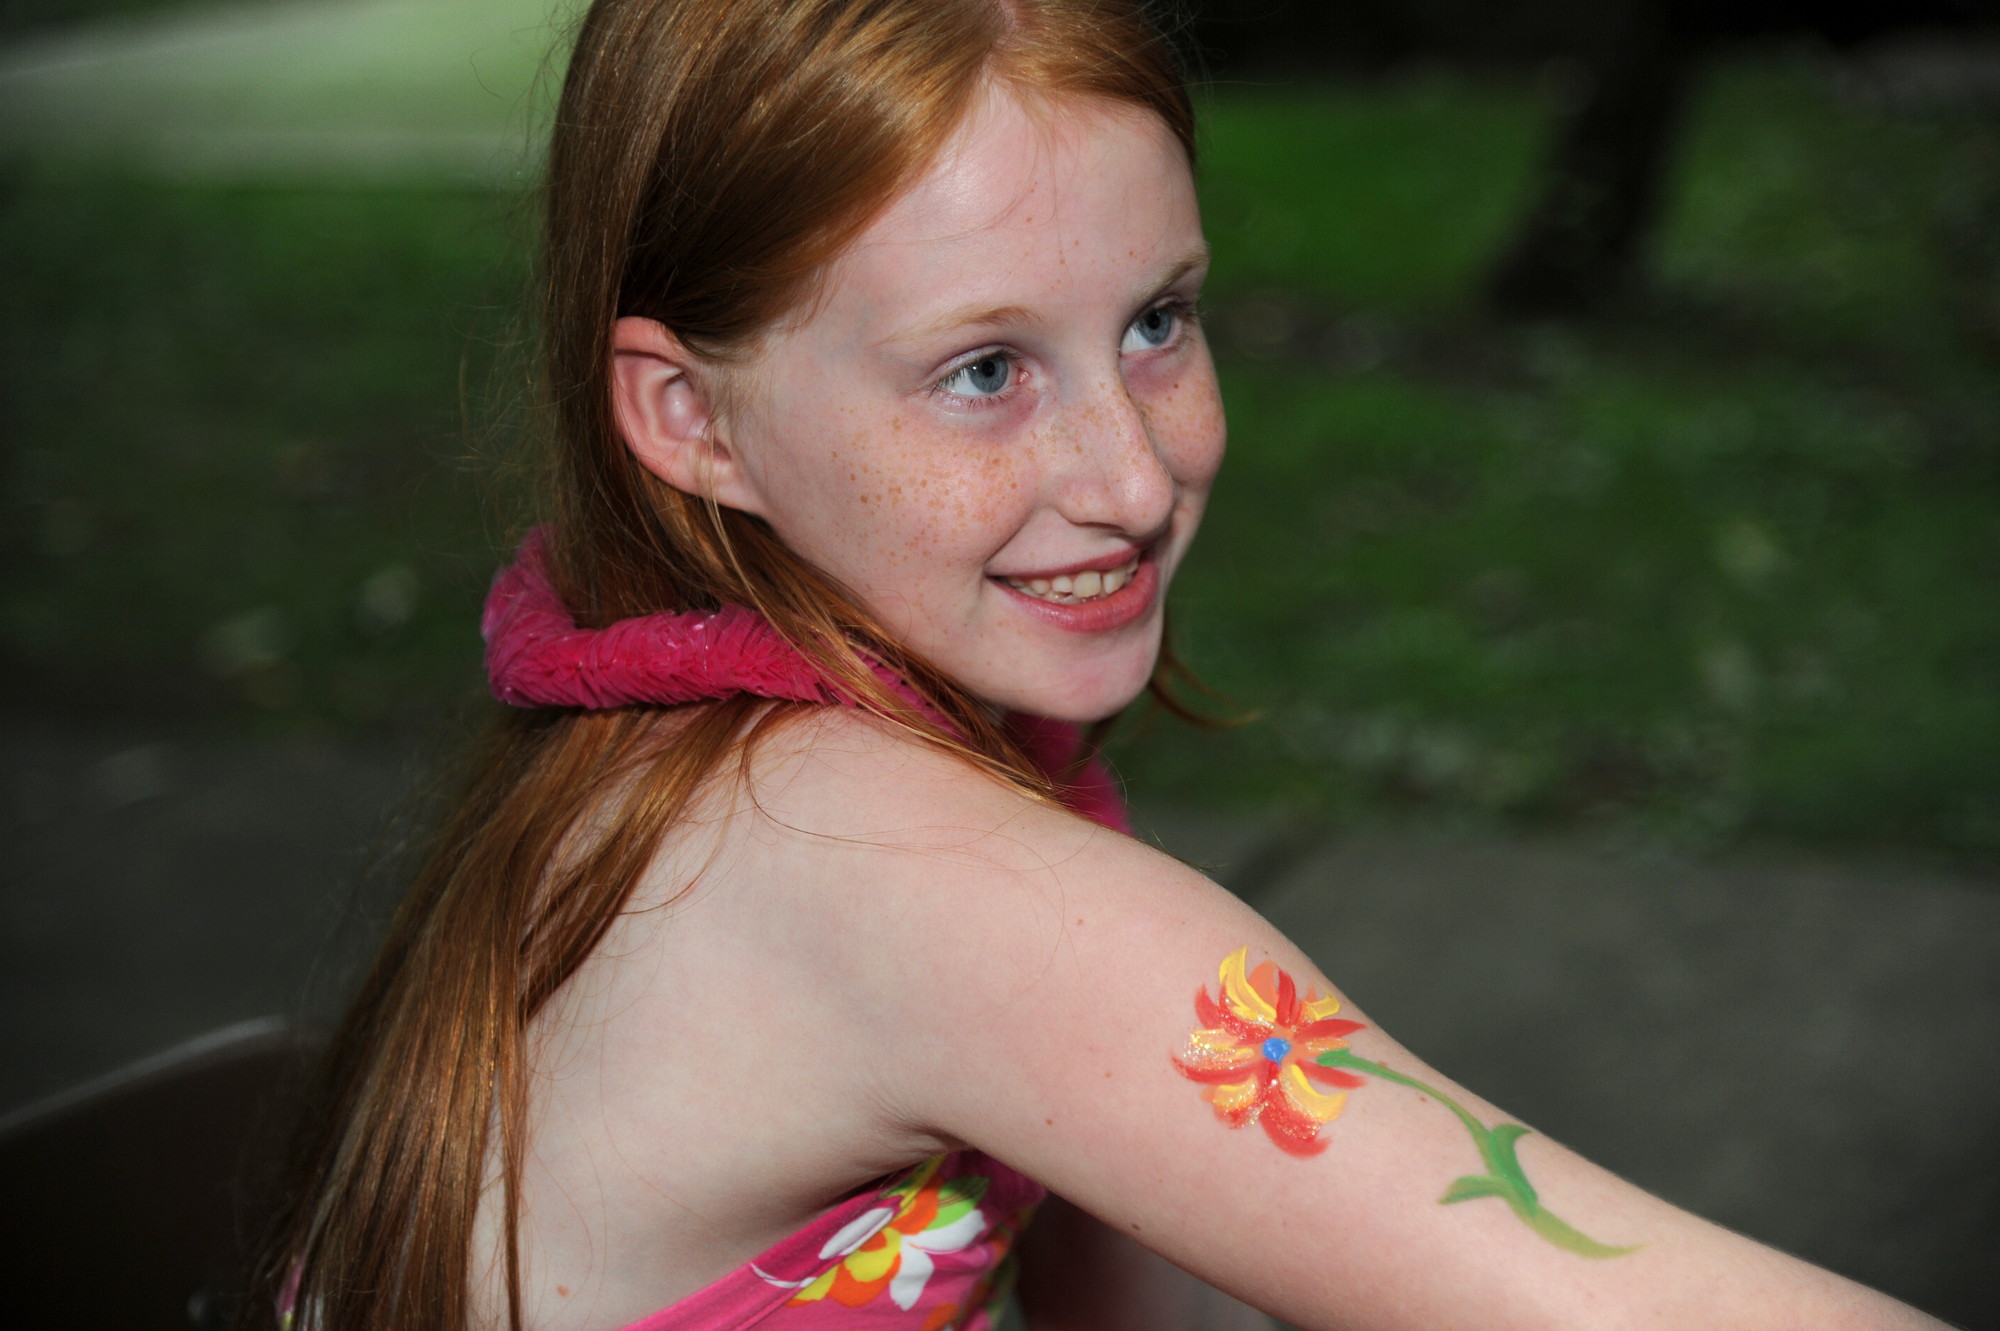 Allison Sinnott, 8, showed off her colorful new tattoo.